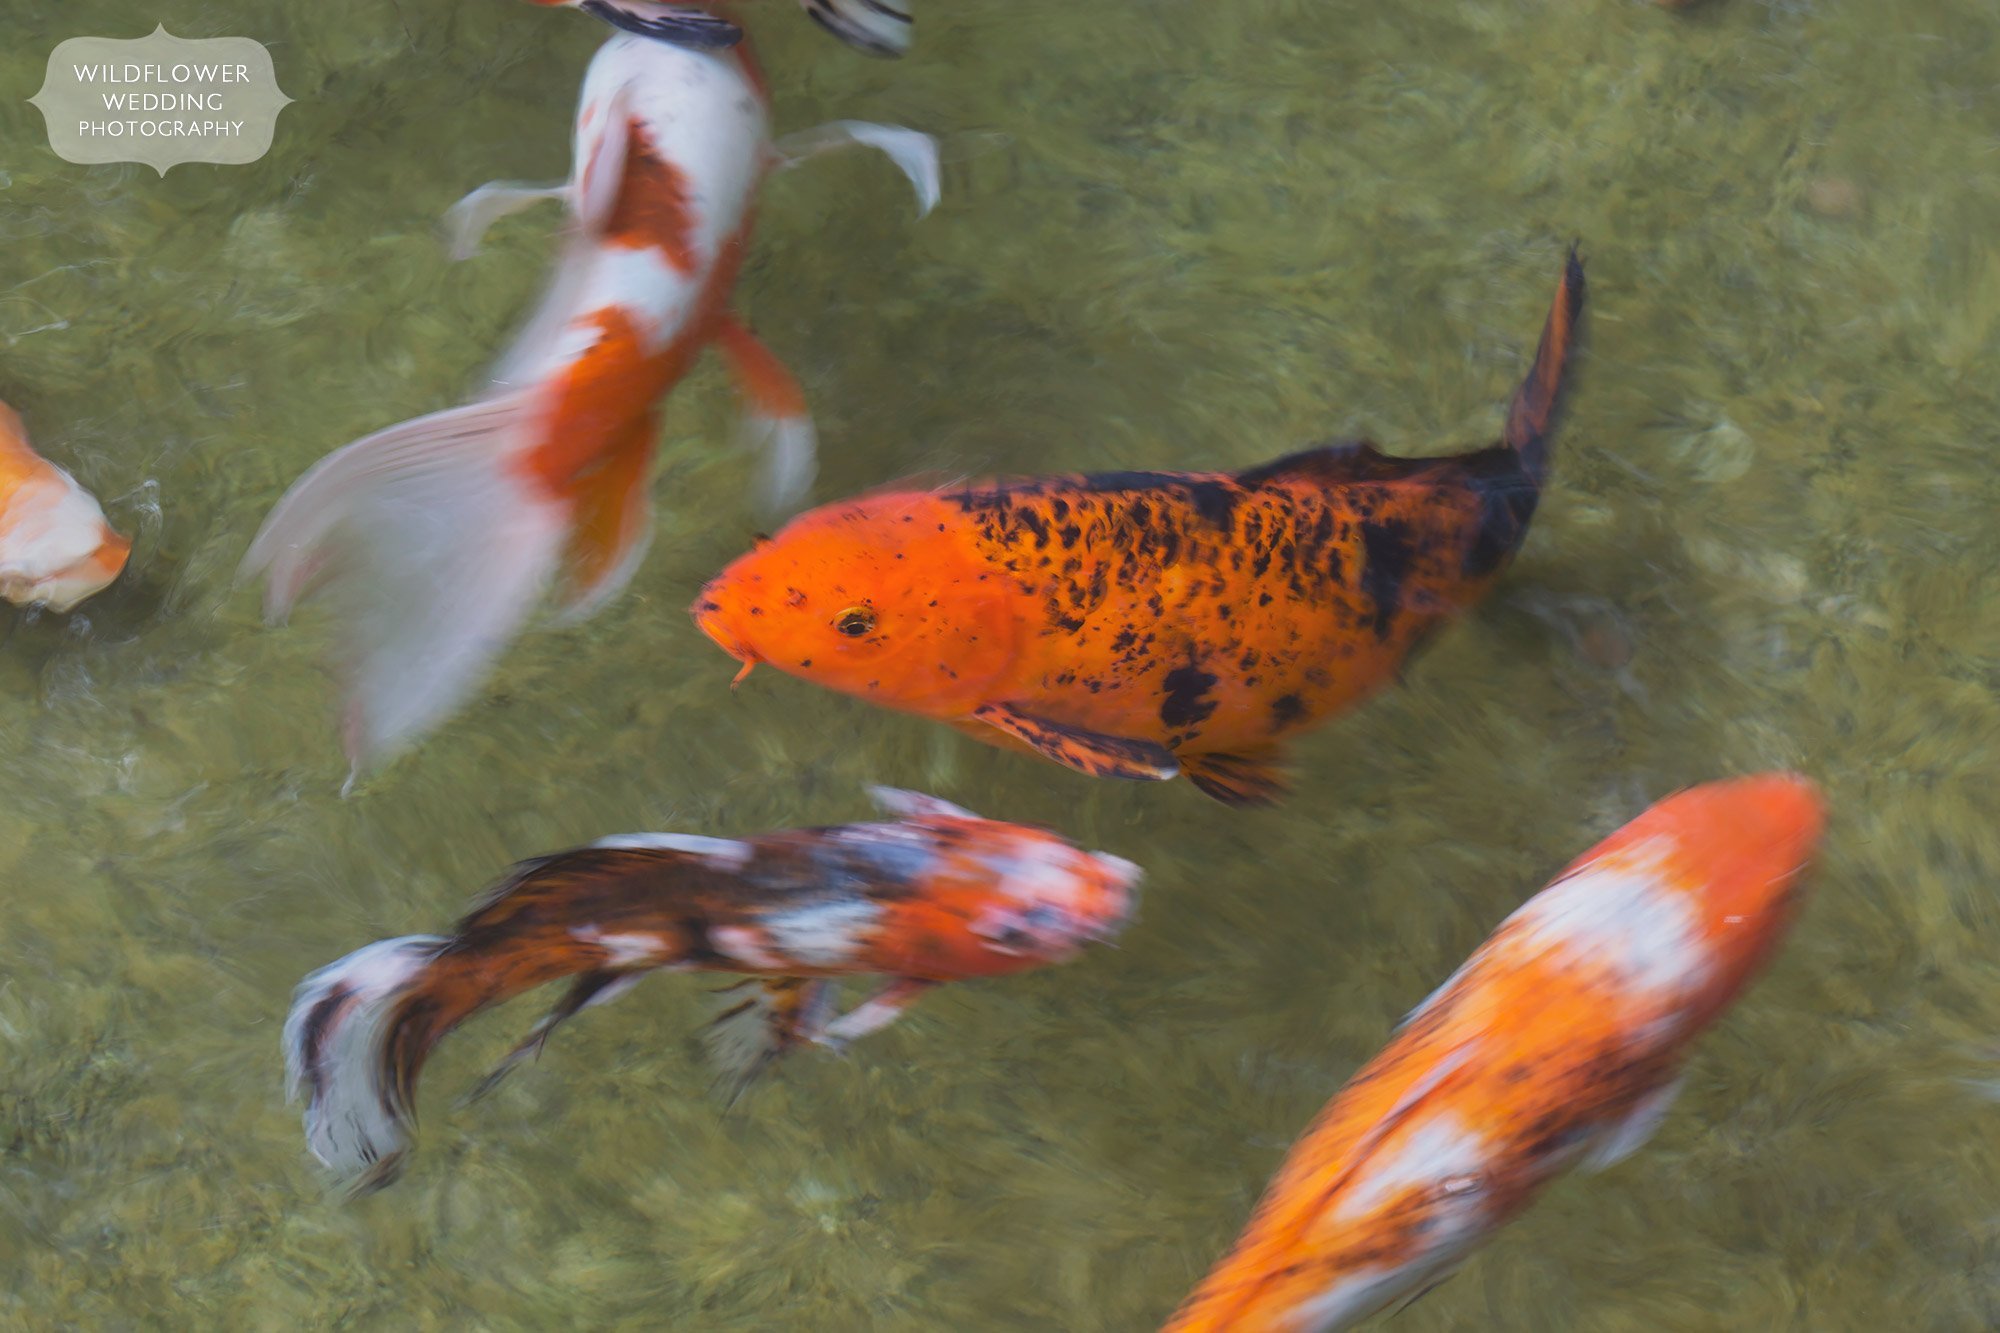 Koi fish swim during a mini-engagement session at Shelter Gardens.